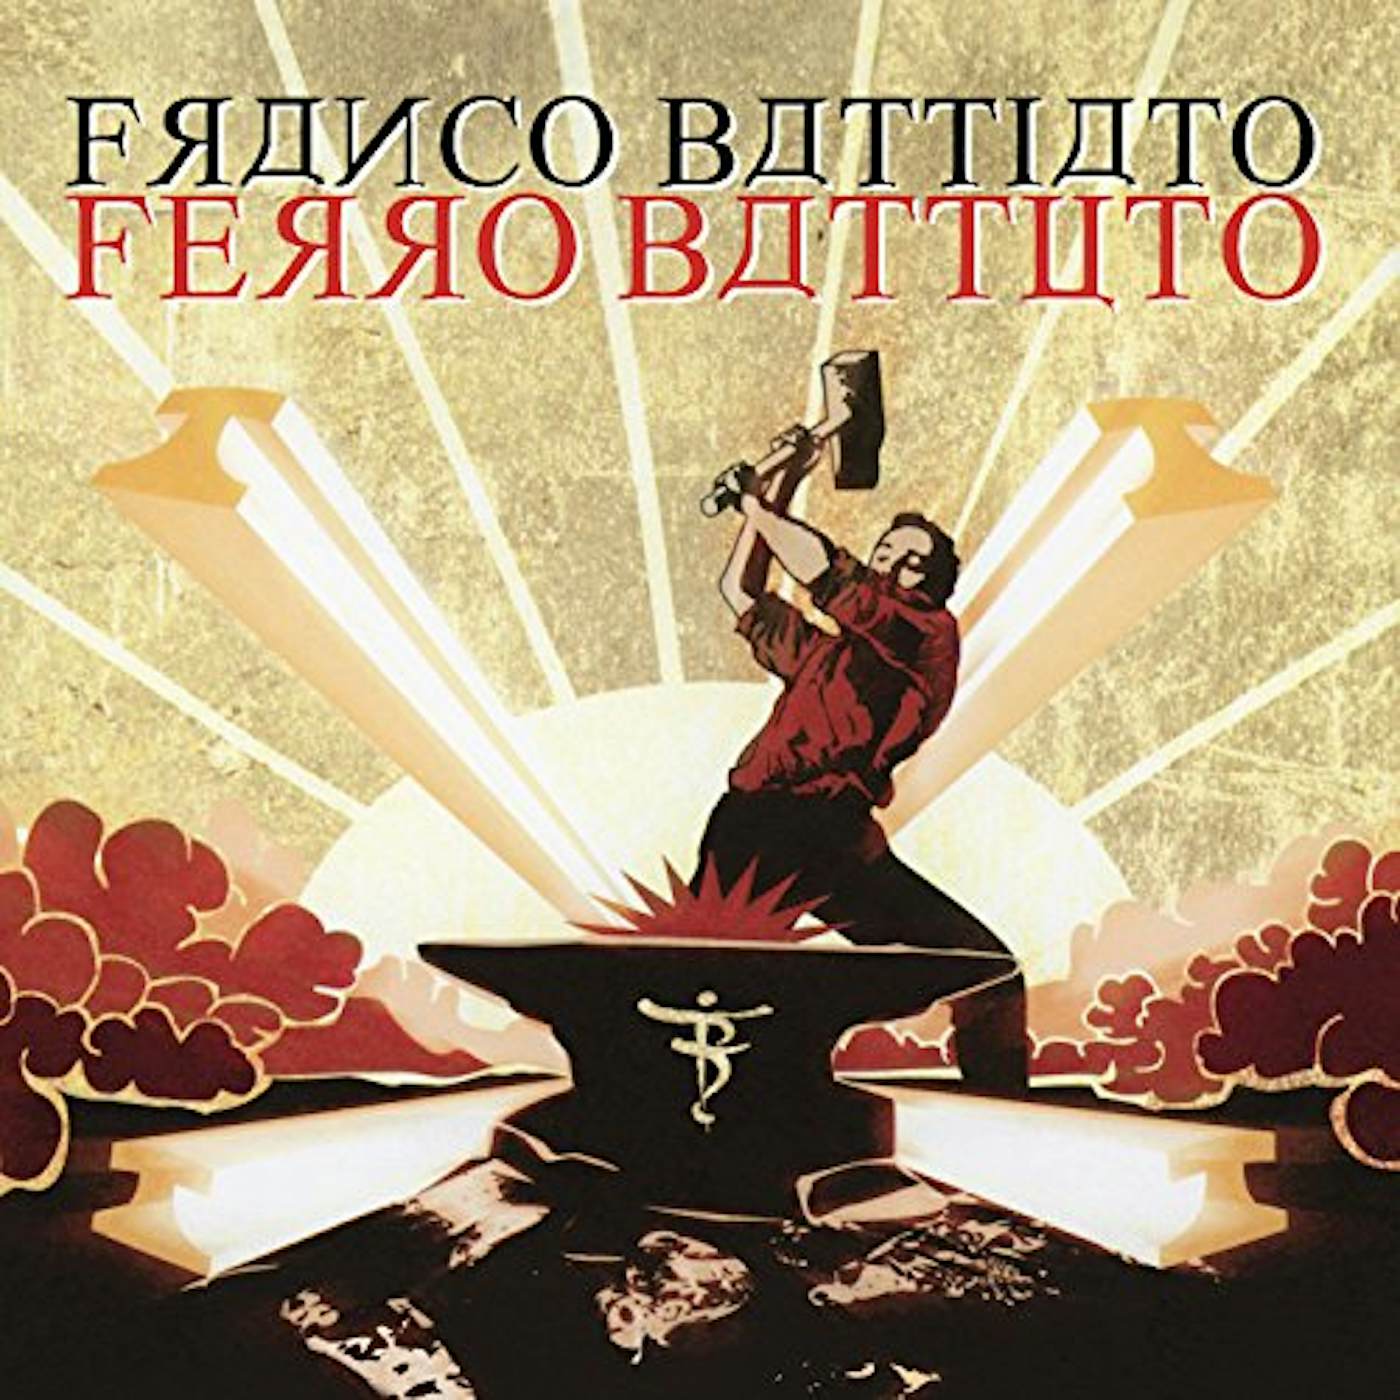 Franco Battiato Ferro Battuto Vinyl Record